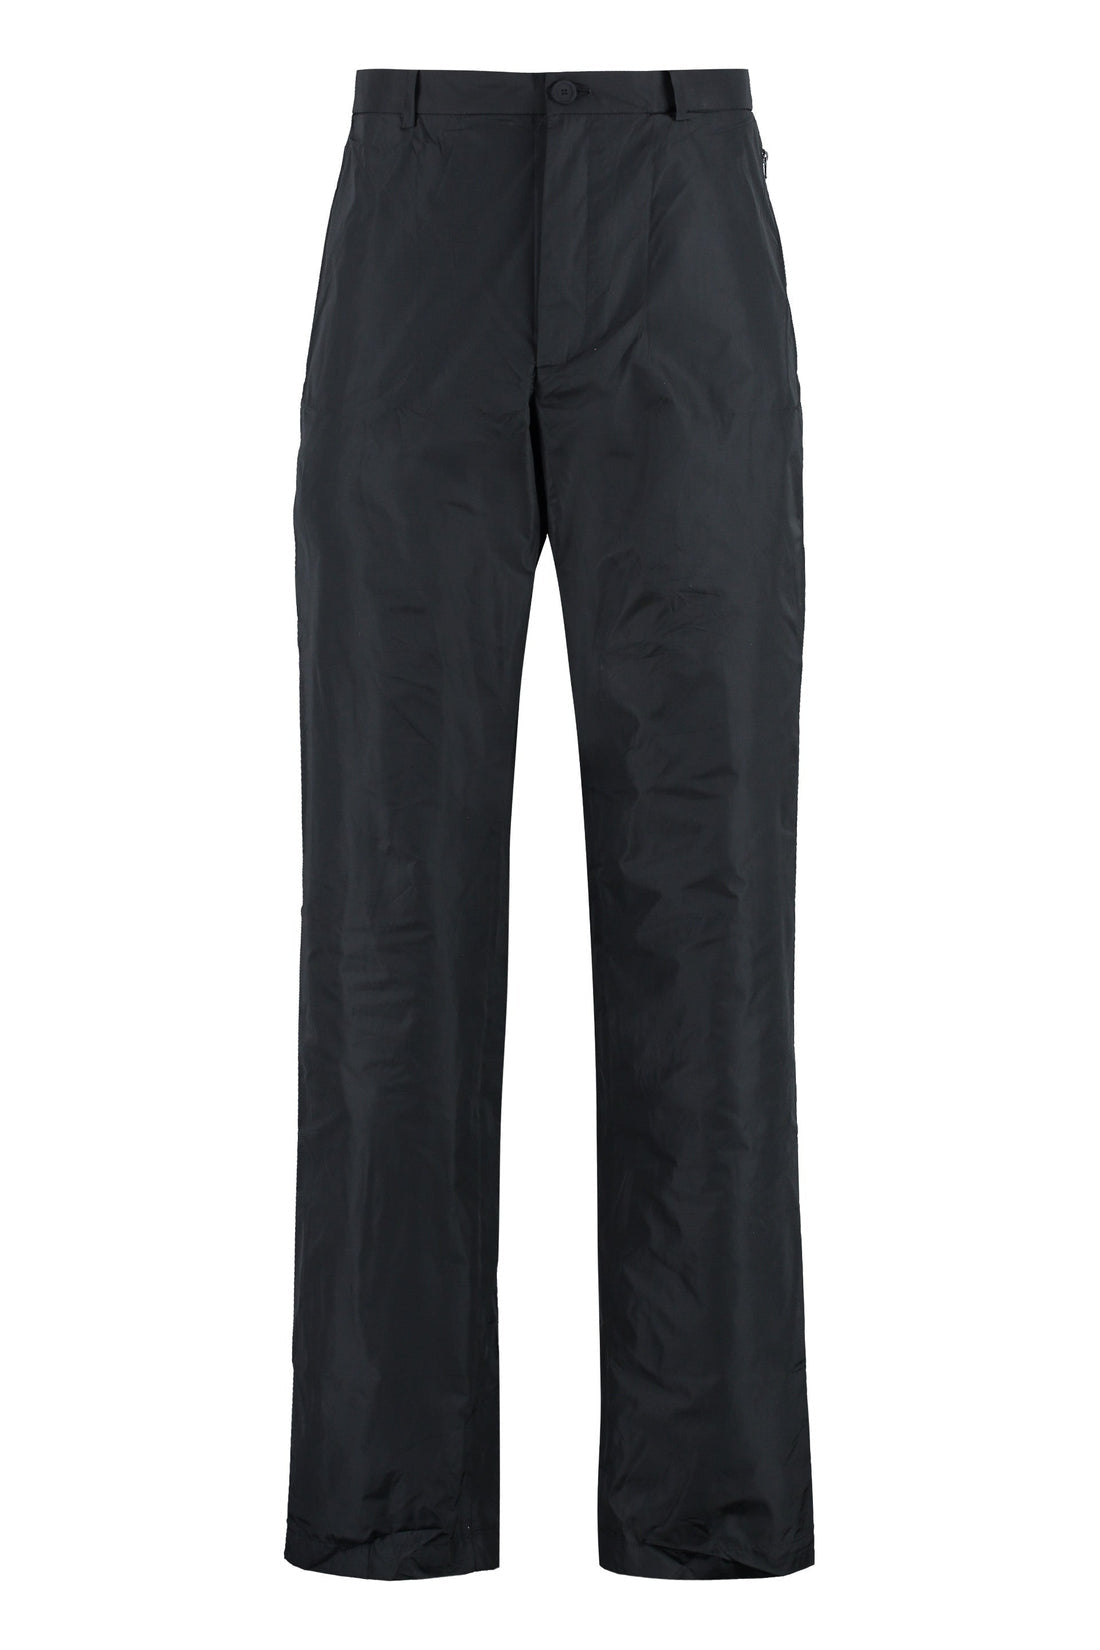 Balenciaga-OUTLET-SALE-Technical fabric pants-ARCHIVIST